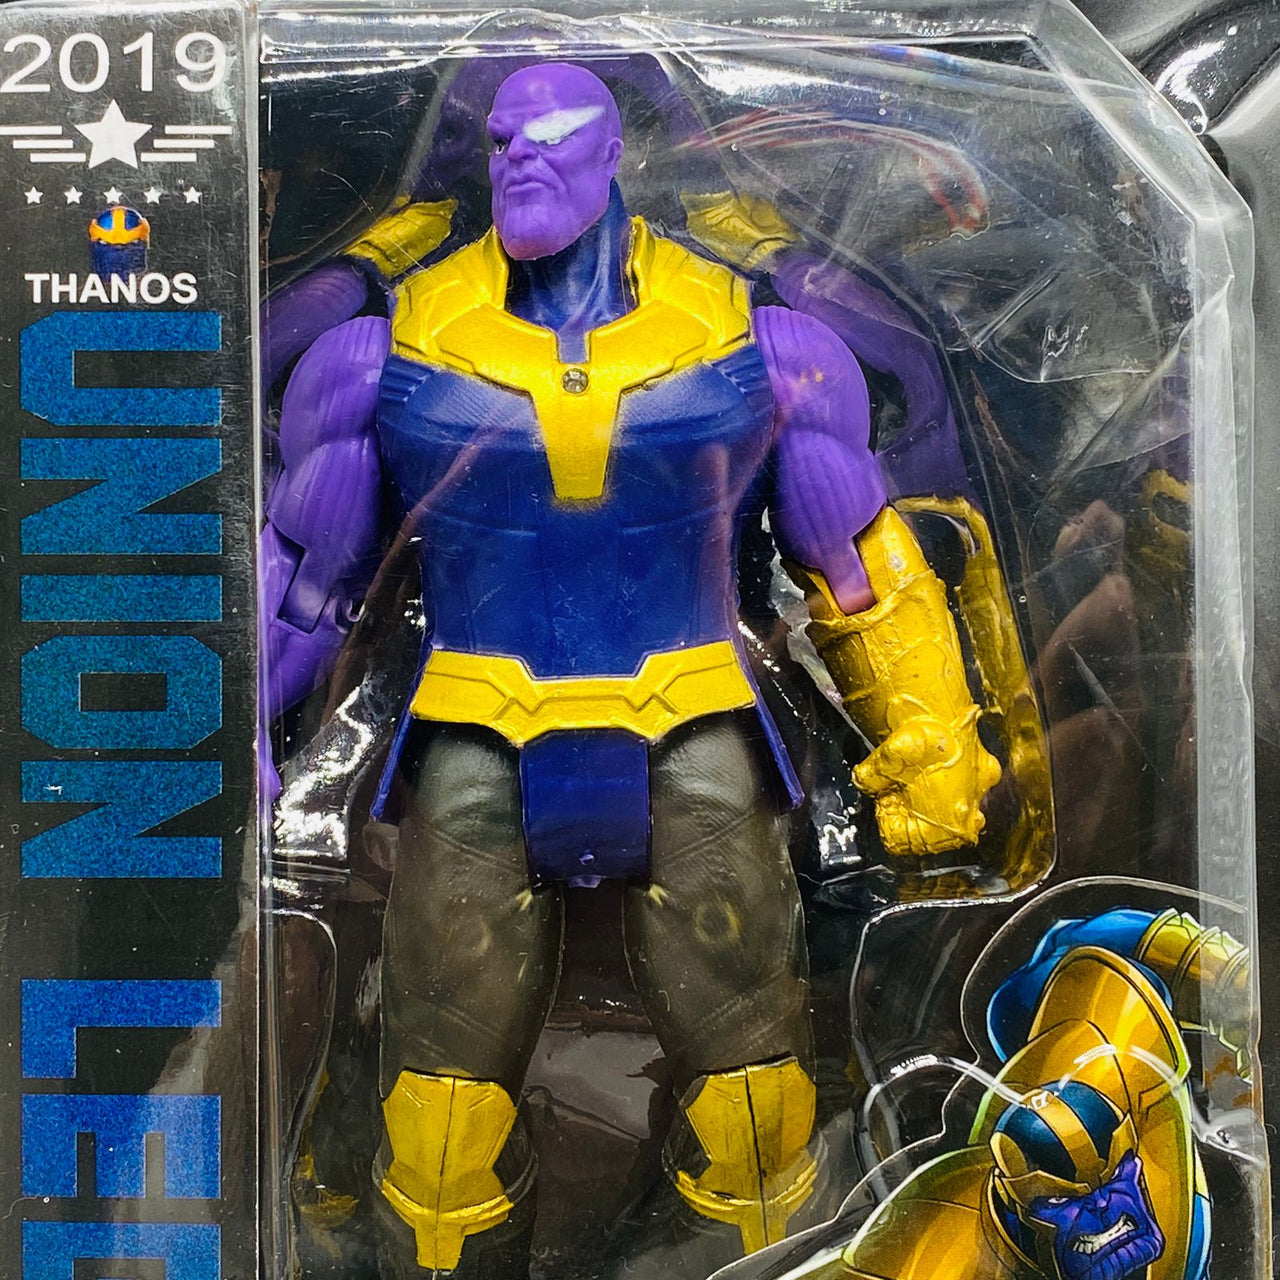 Thanos Action Figure Toy